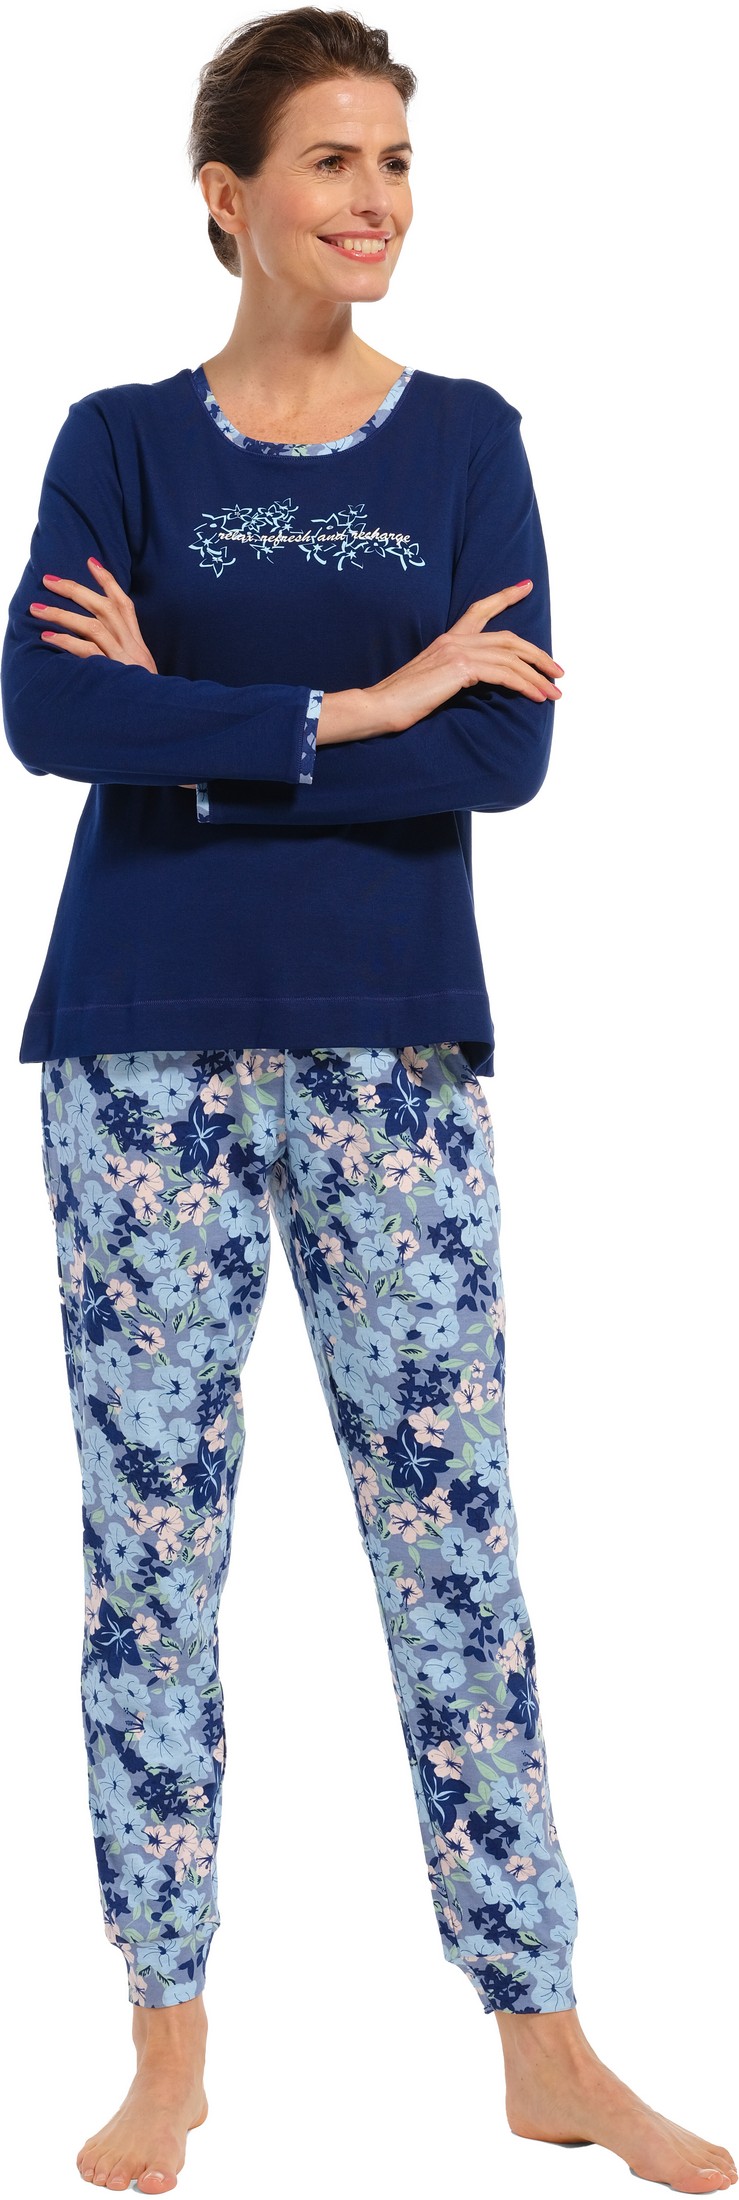 Pastunette dames pyjama 20232-130-3 - Blauw - 52